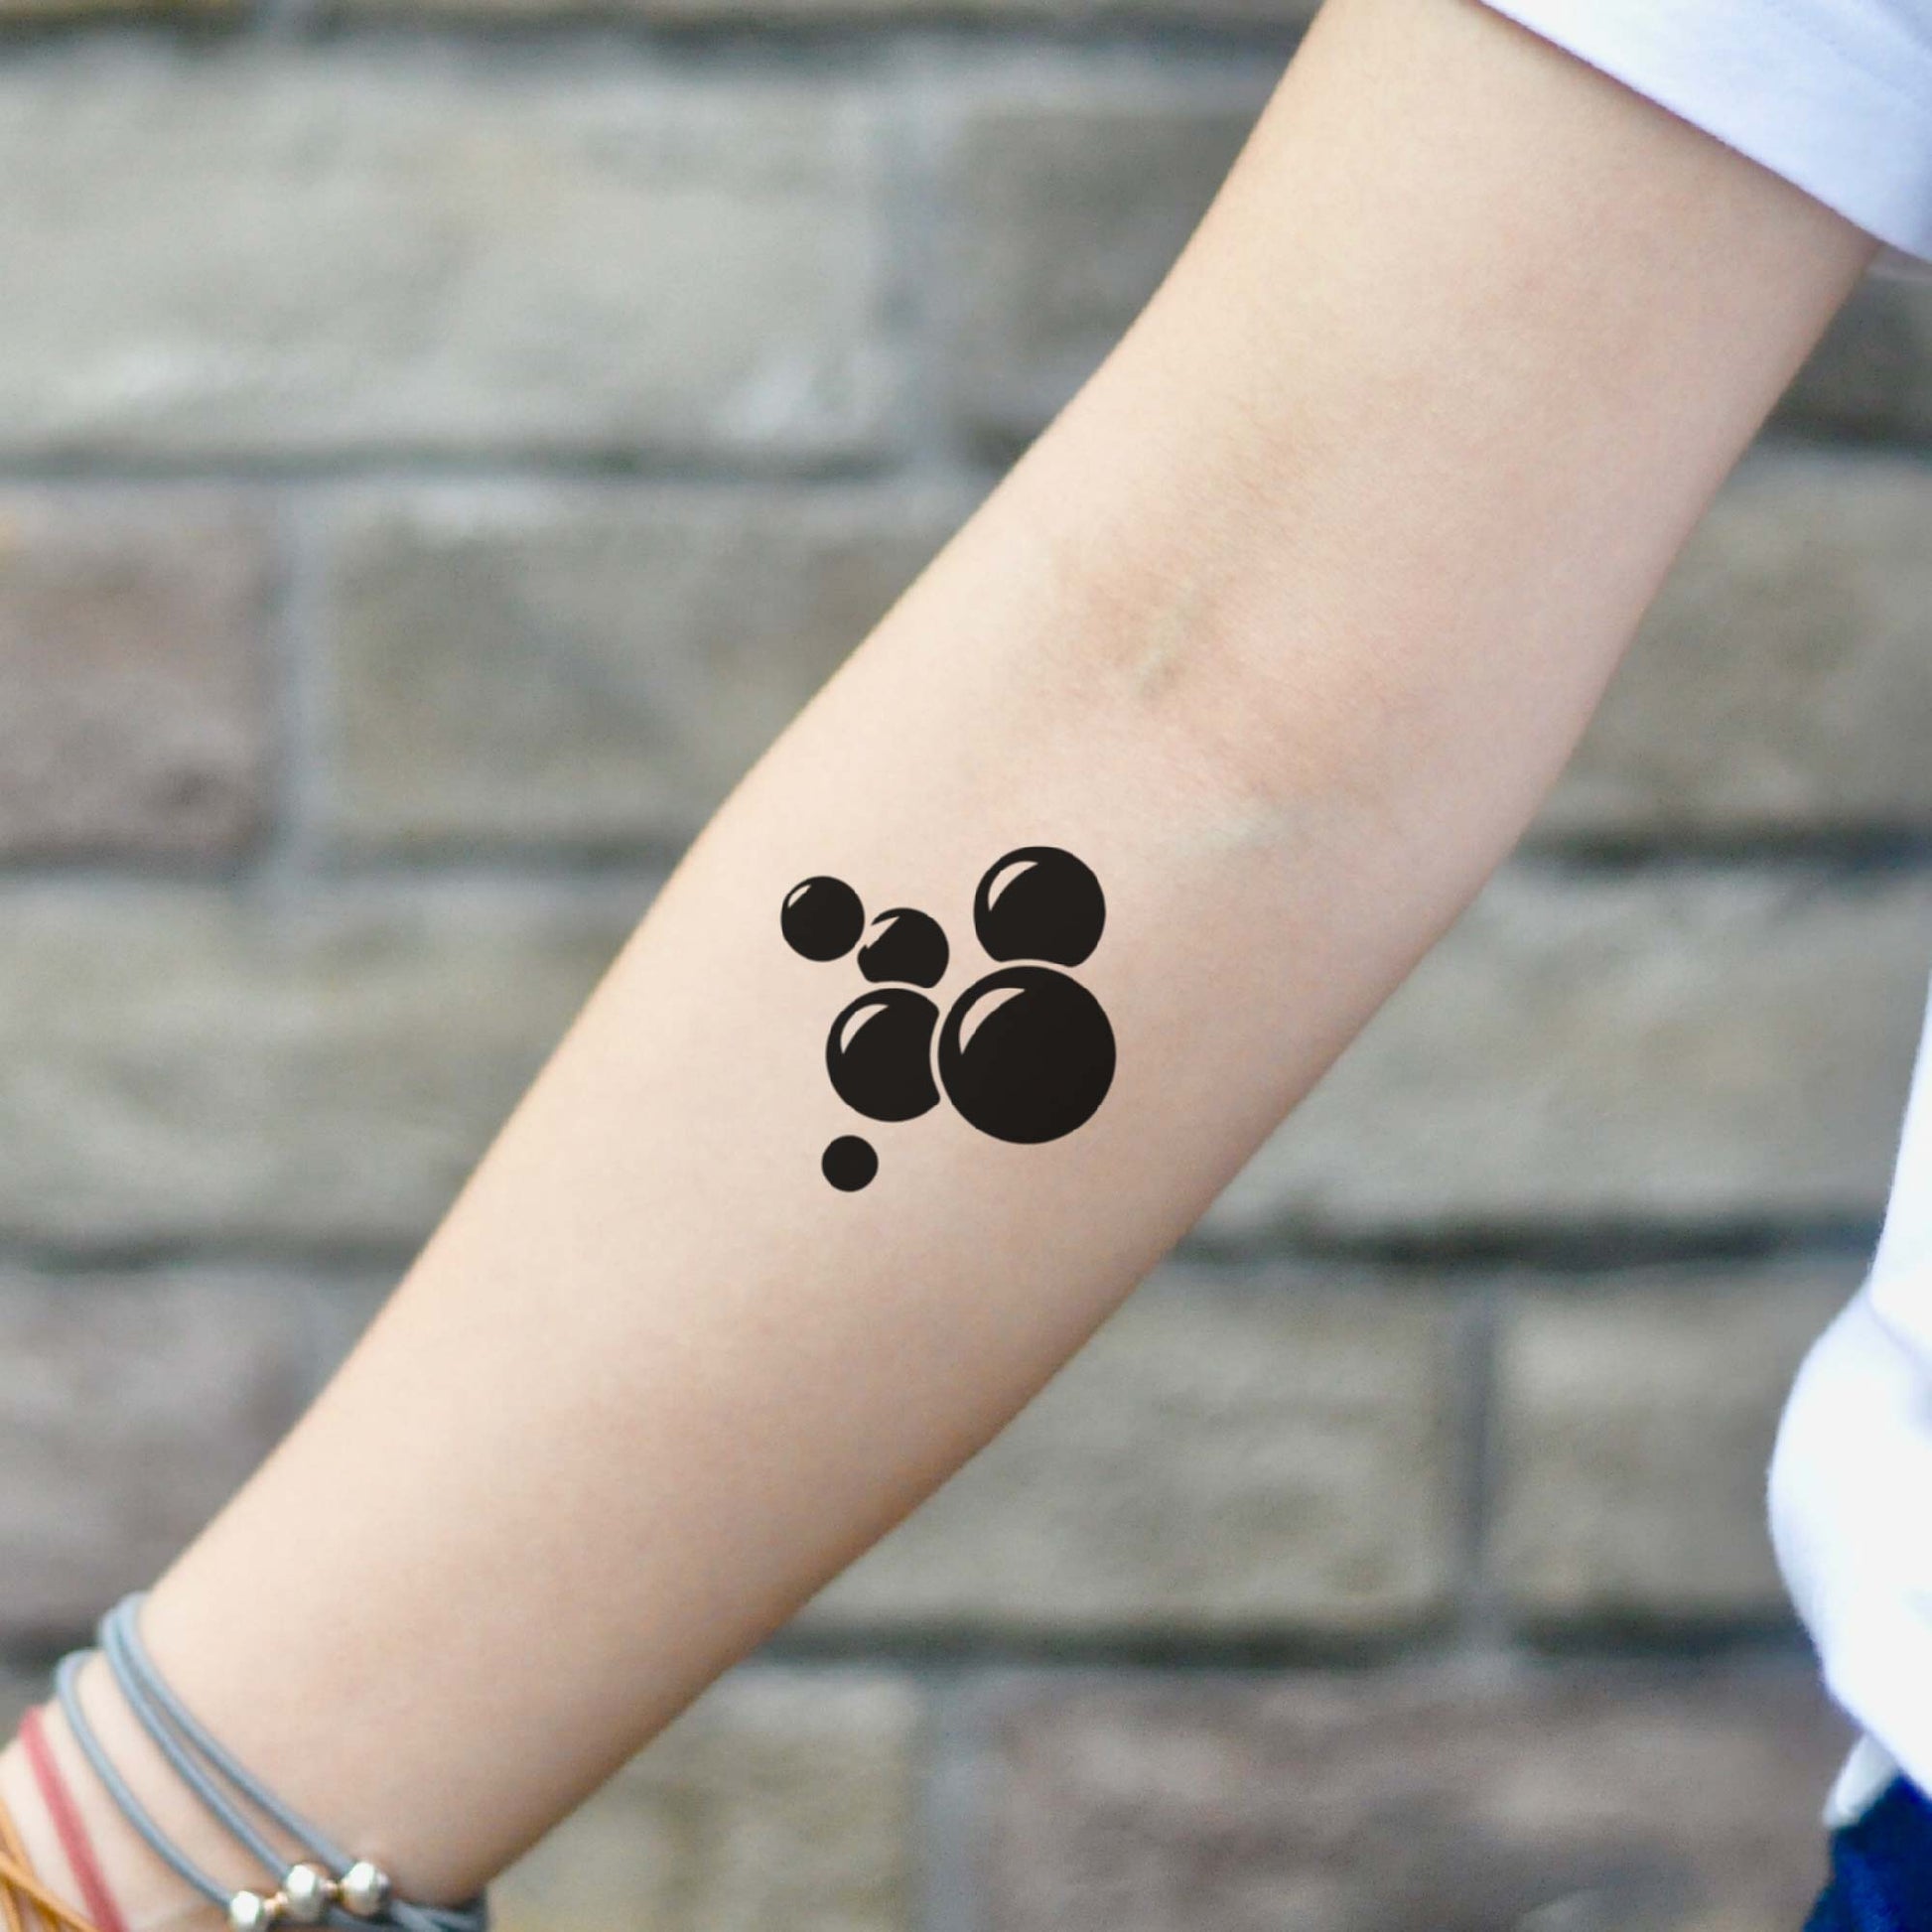 fake small soap bubbles minimalist temporary tattoo sticker design idea on inner upper arm forearm